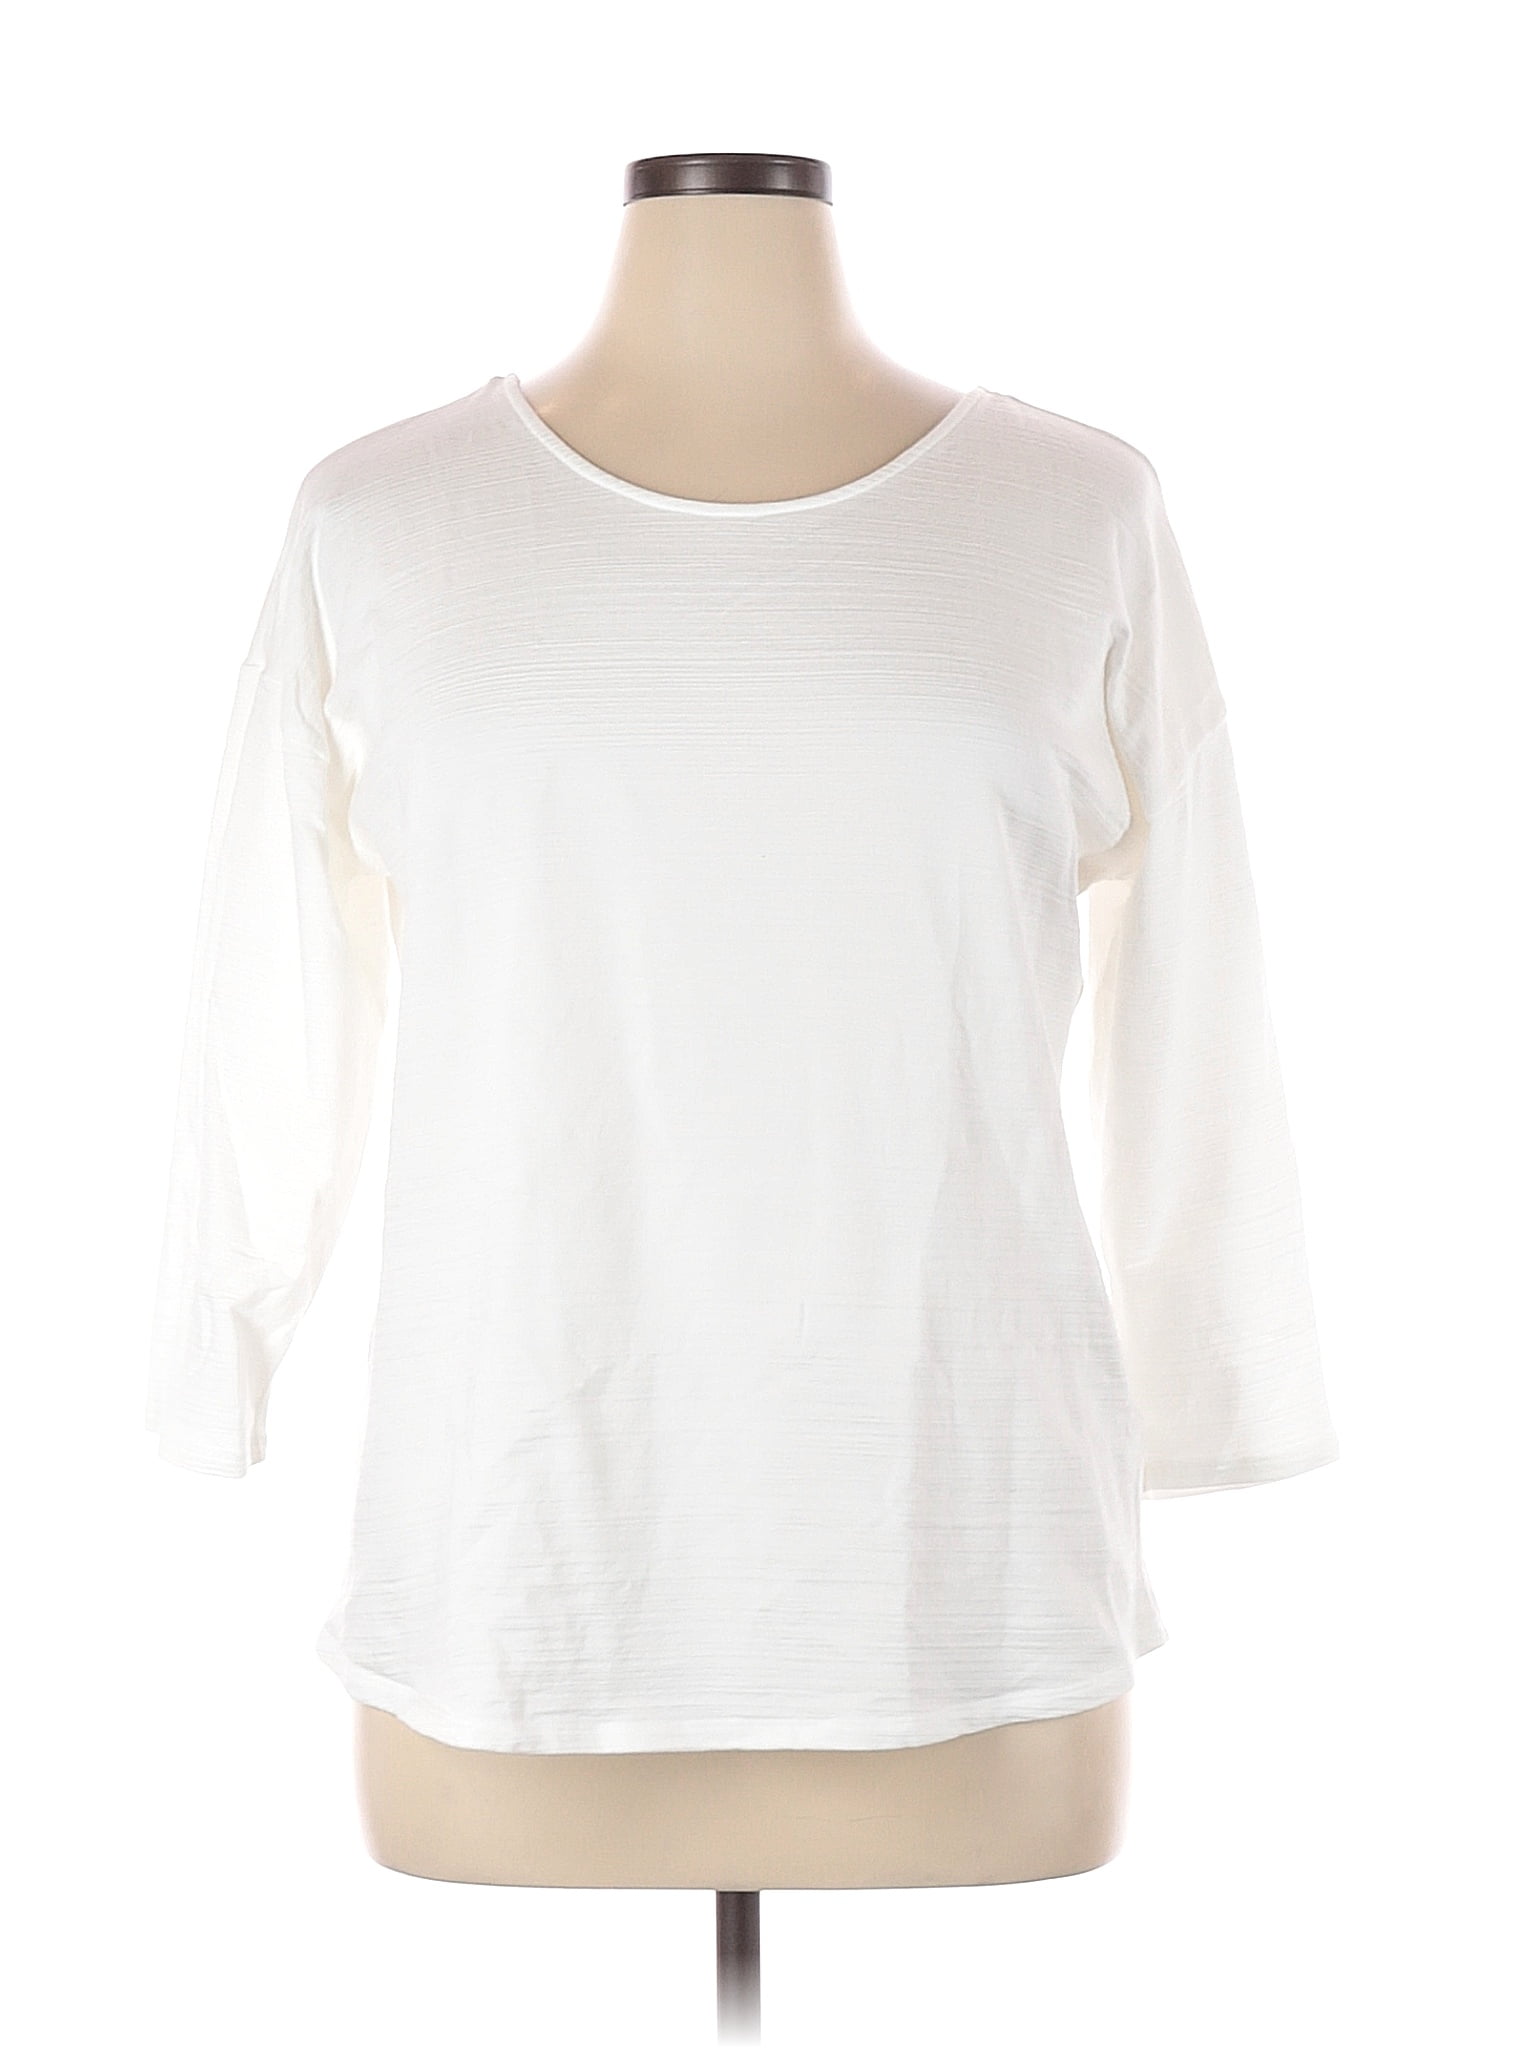 Croft & Barrow White 3/4 Sleeve Blouse Size XL - 50% off | thredUP